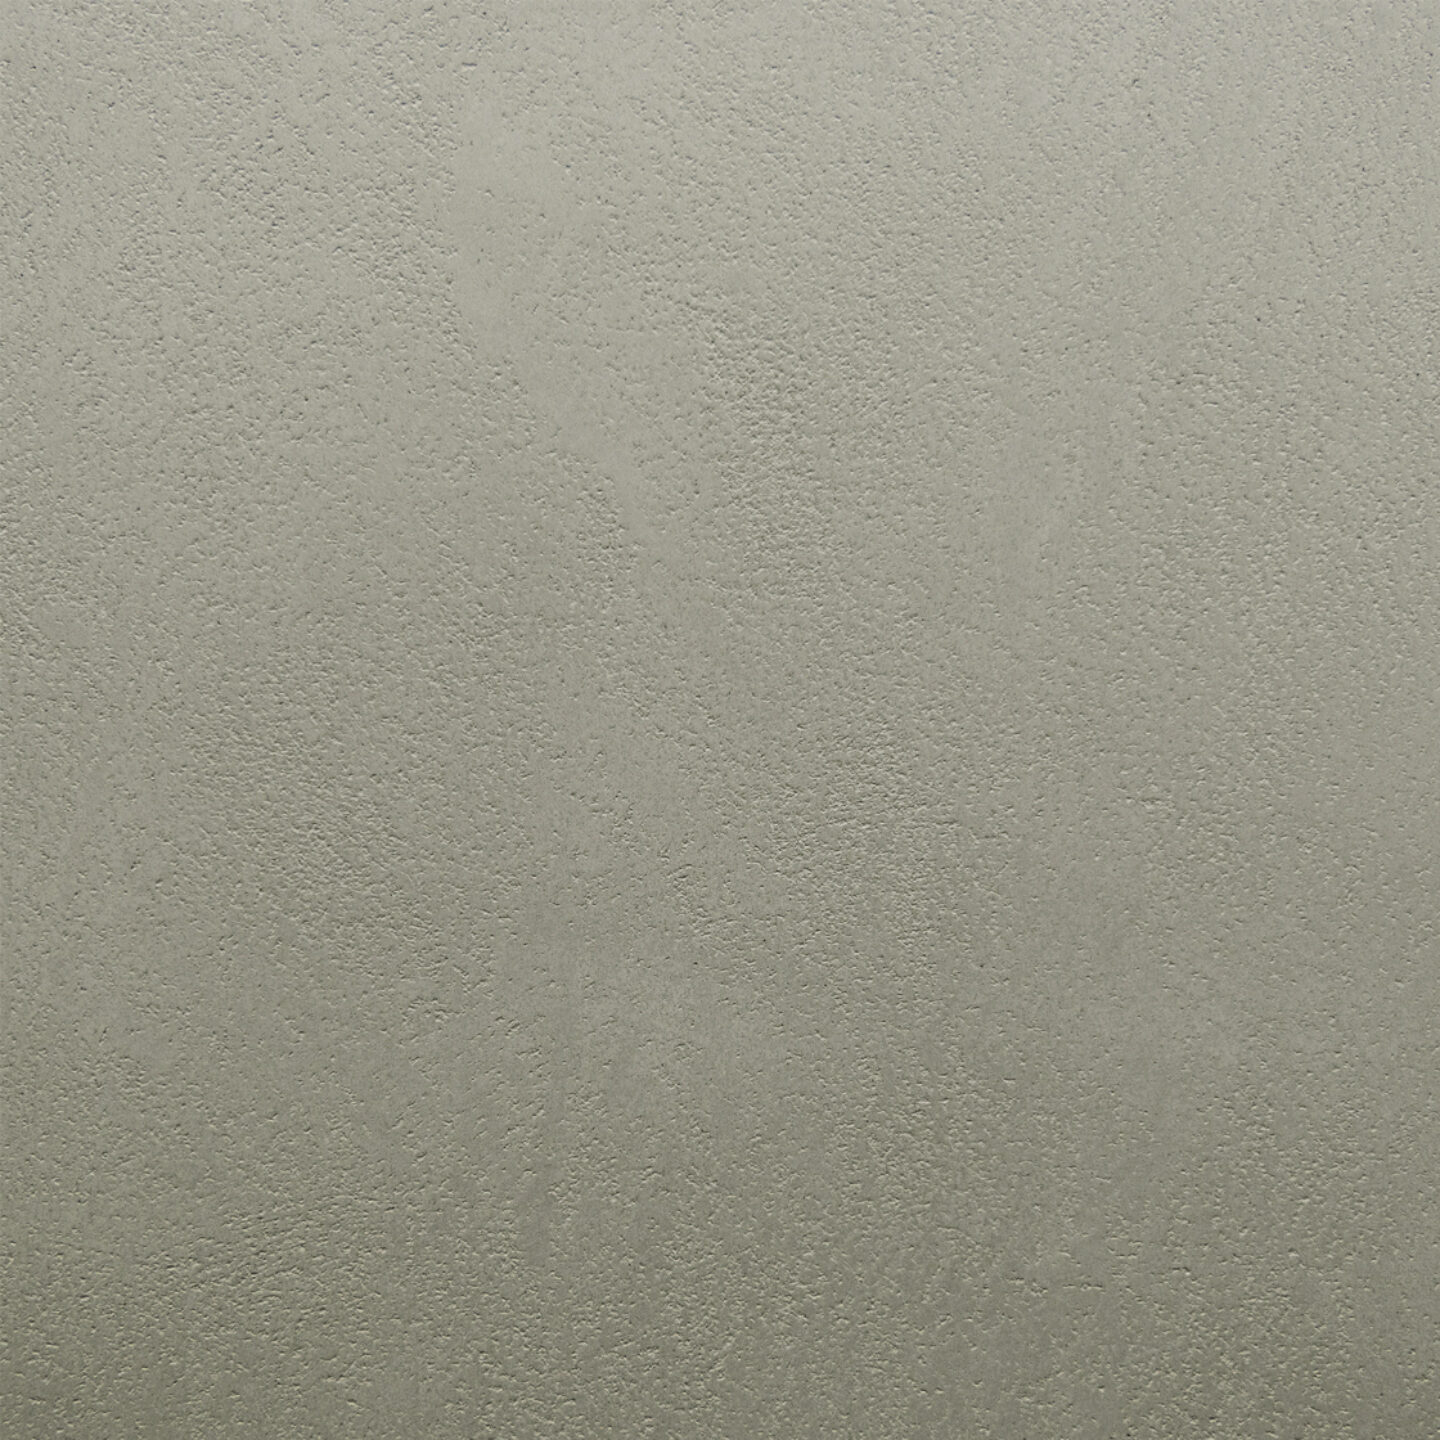 Close up of Armourcoat leatherstone exterior polished plaster finish - 68